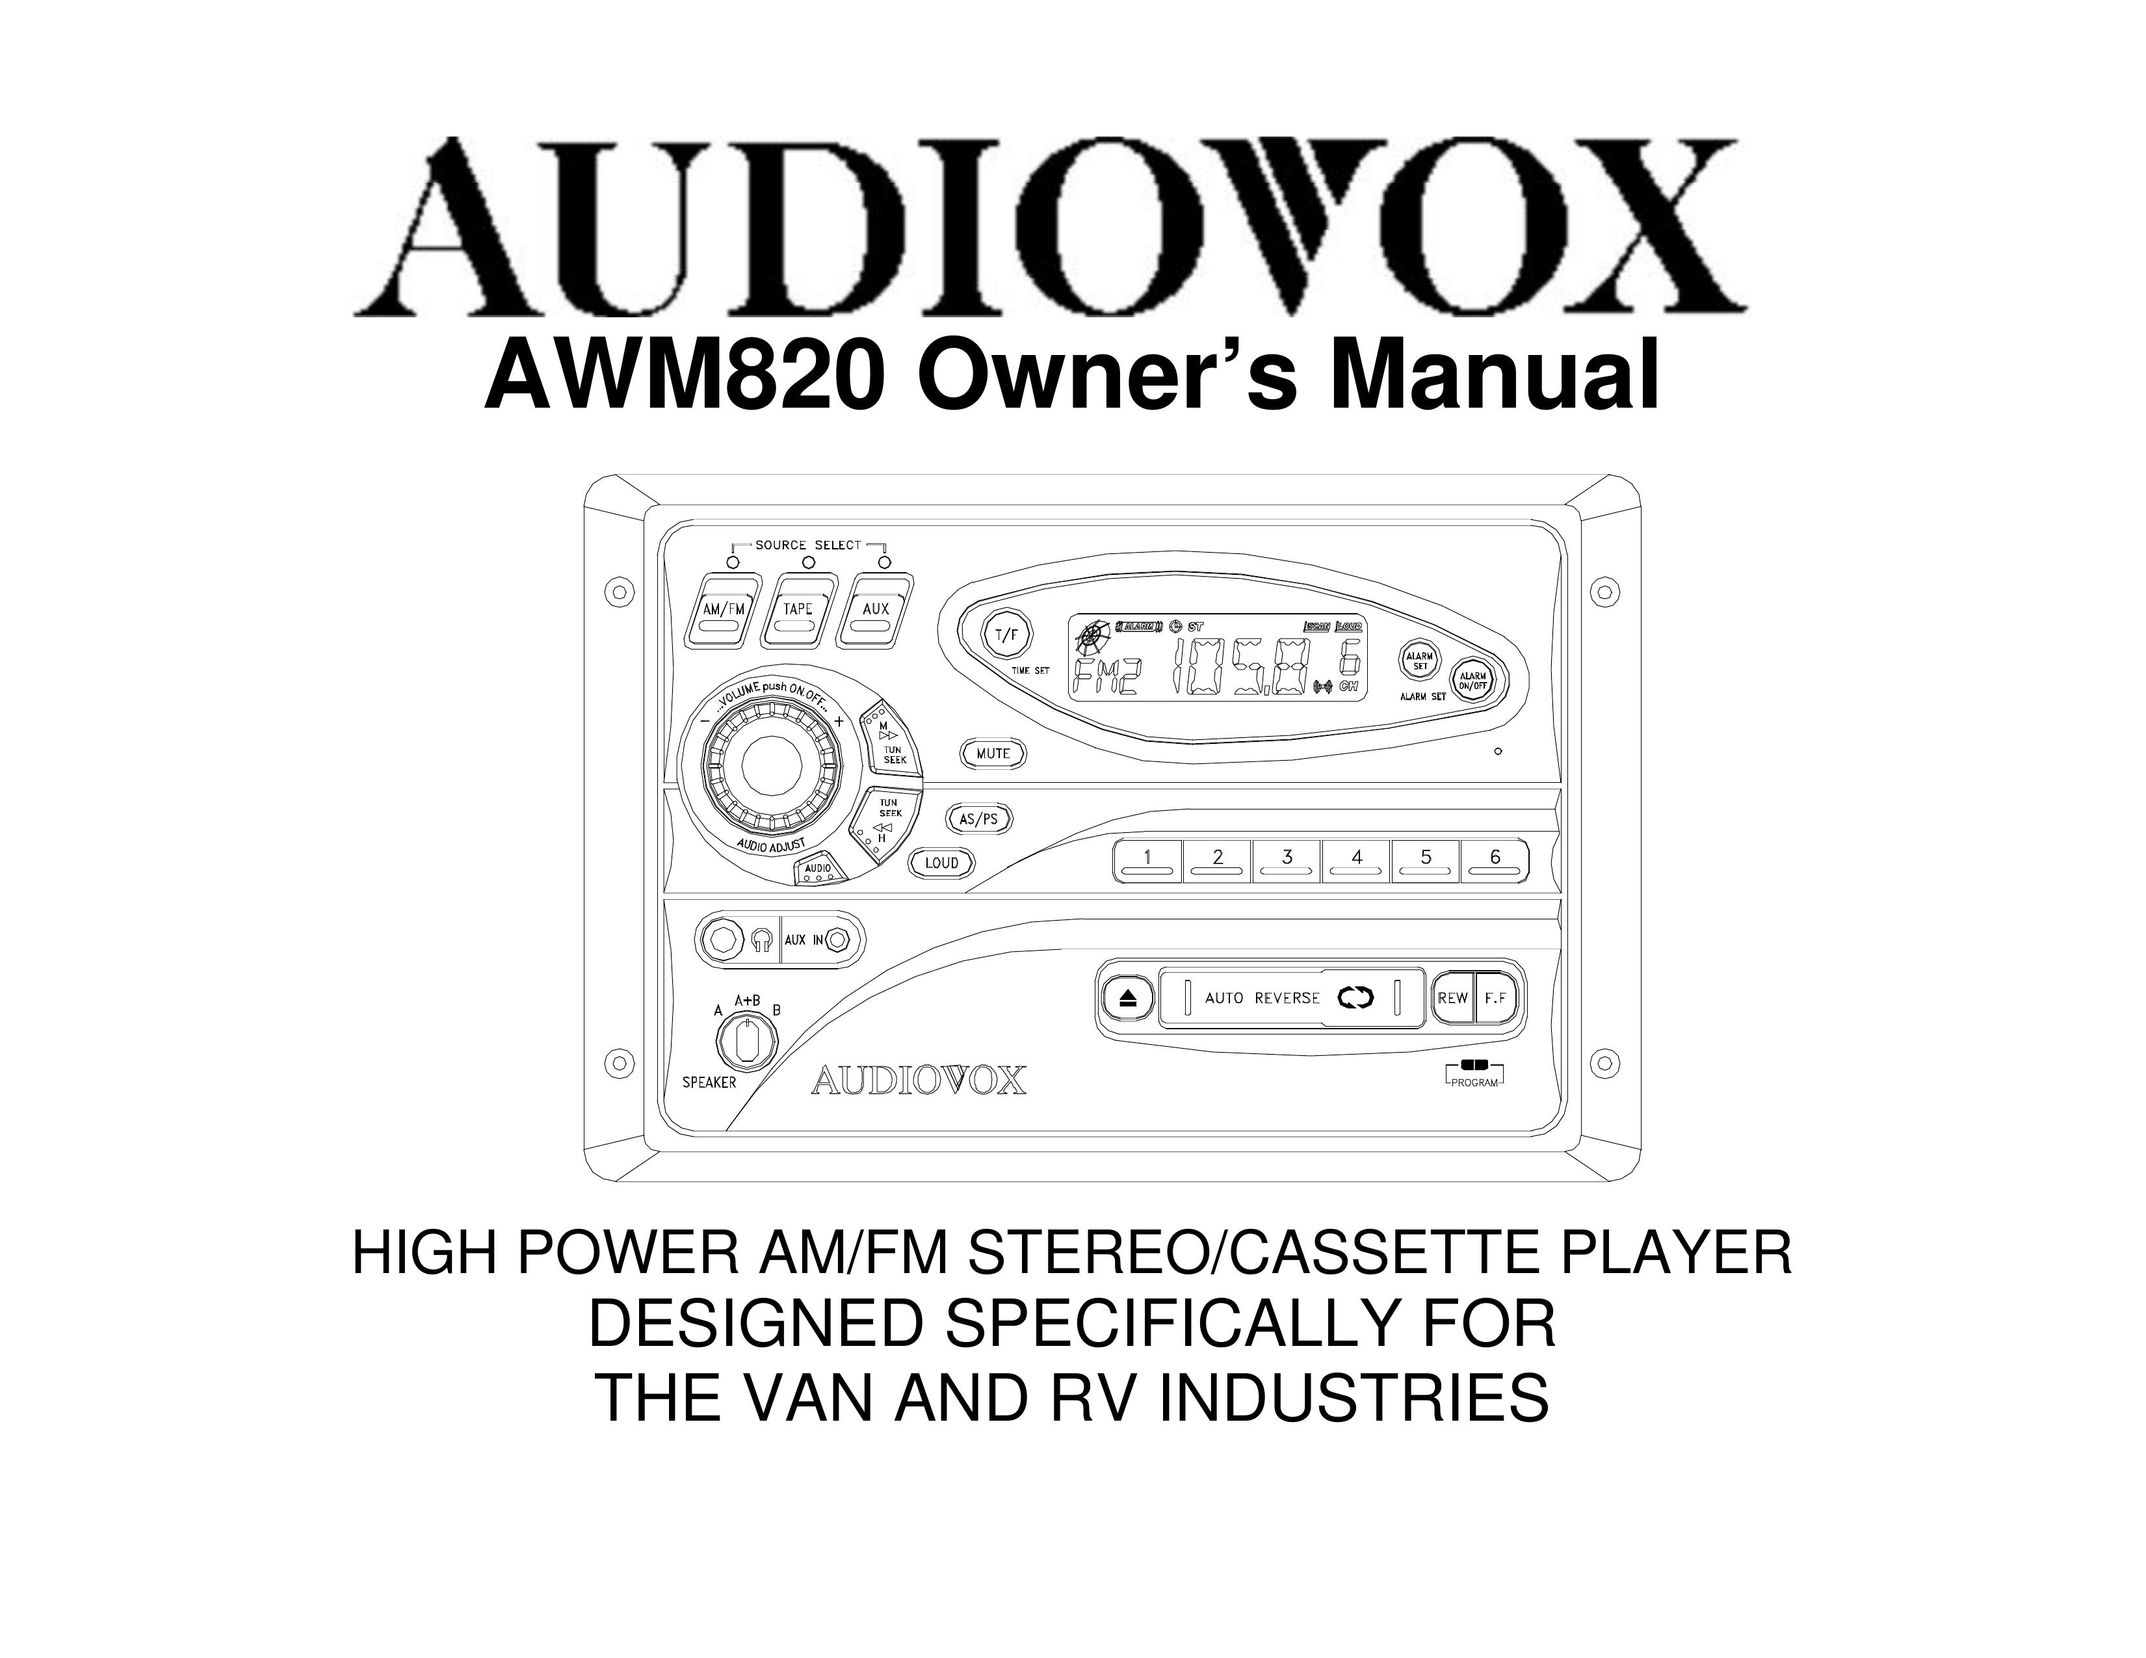 Audiovox AWM820 Cassette Player User Manual